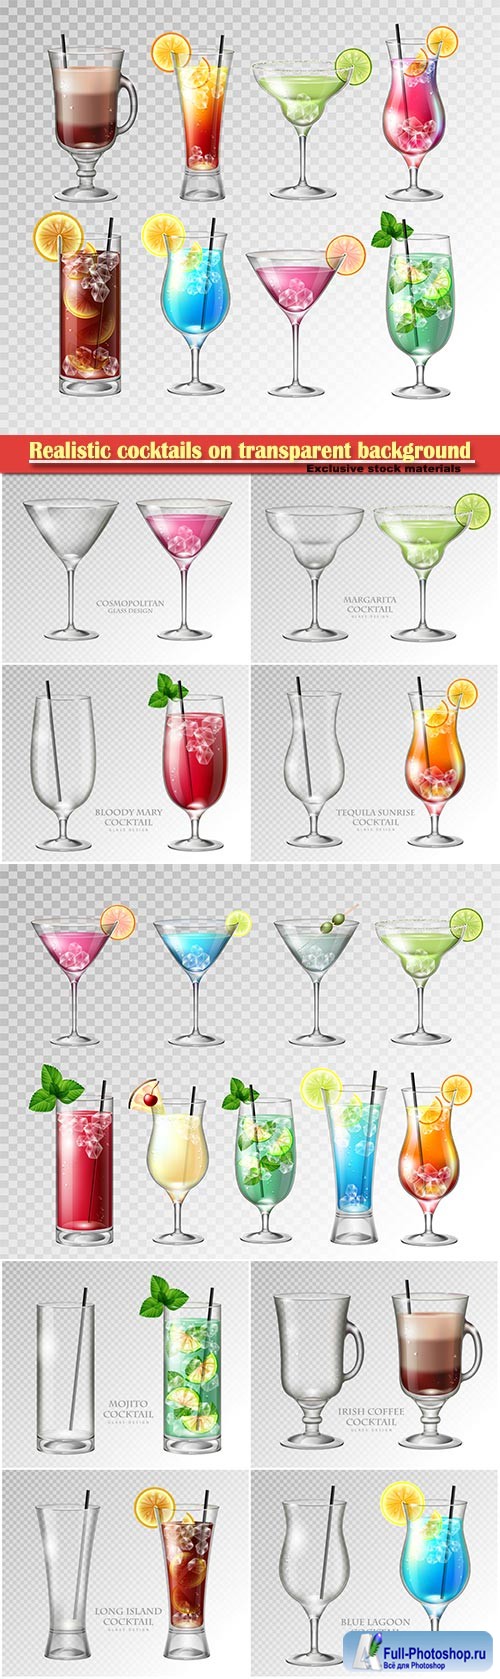 Realistic cocktails on transparent background vector illustration